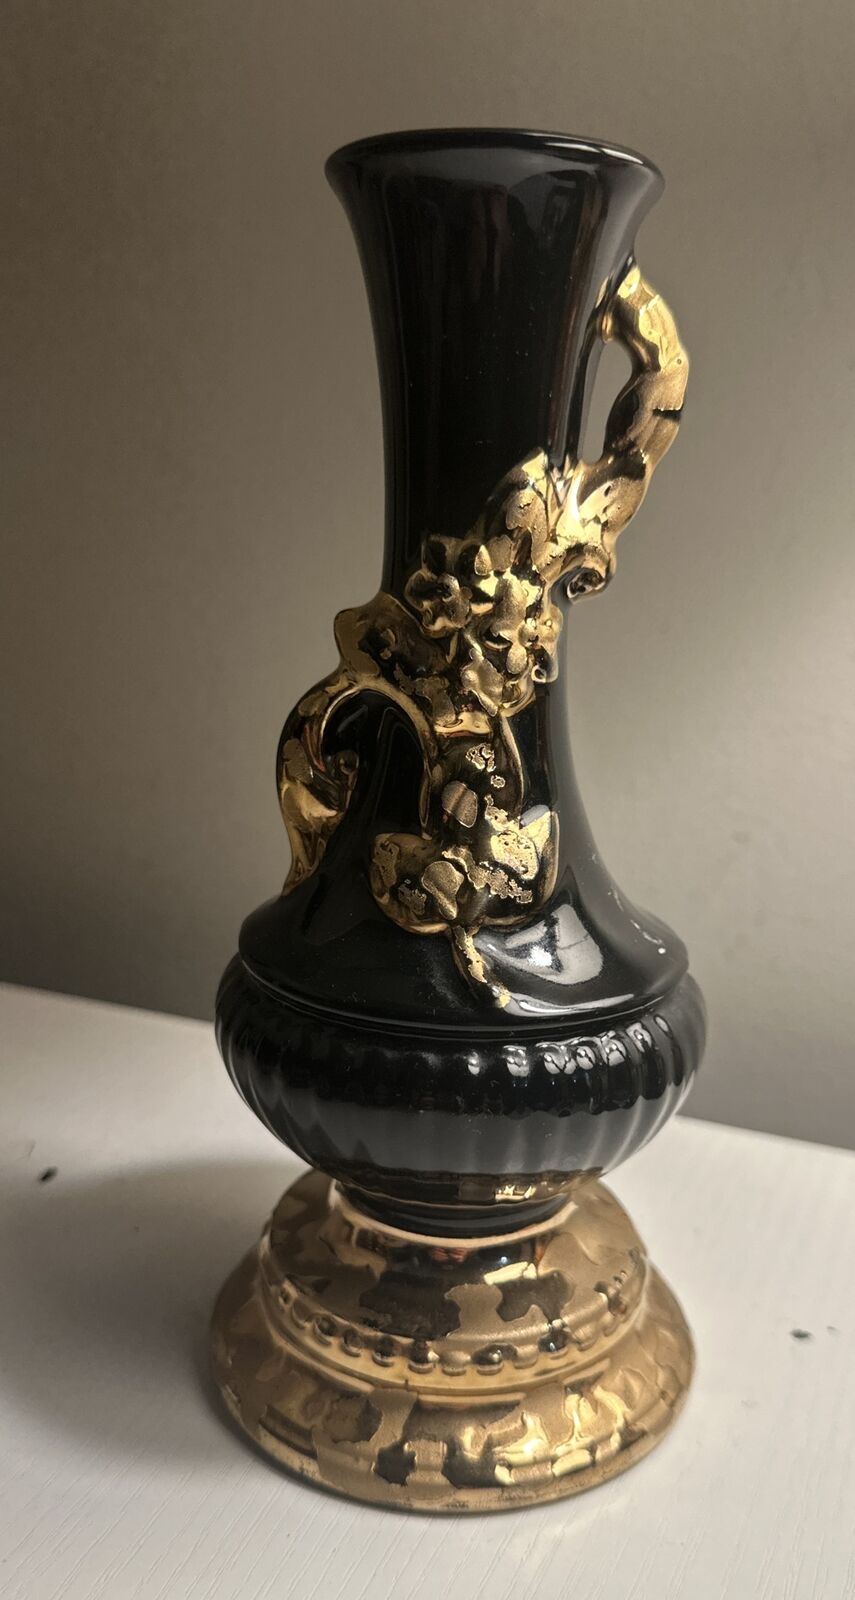 Vintage Black savoy Vase 7.5” Tall With 24kt Gold